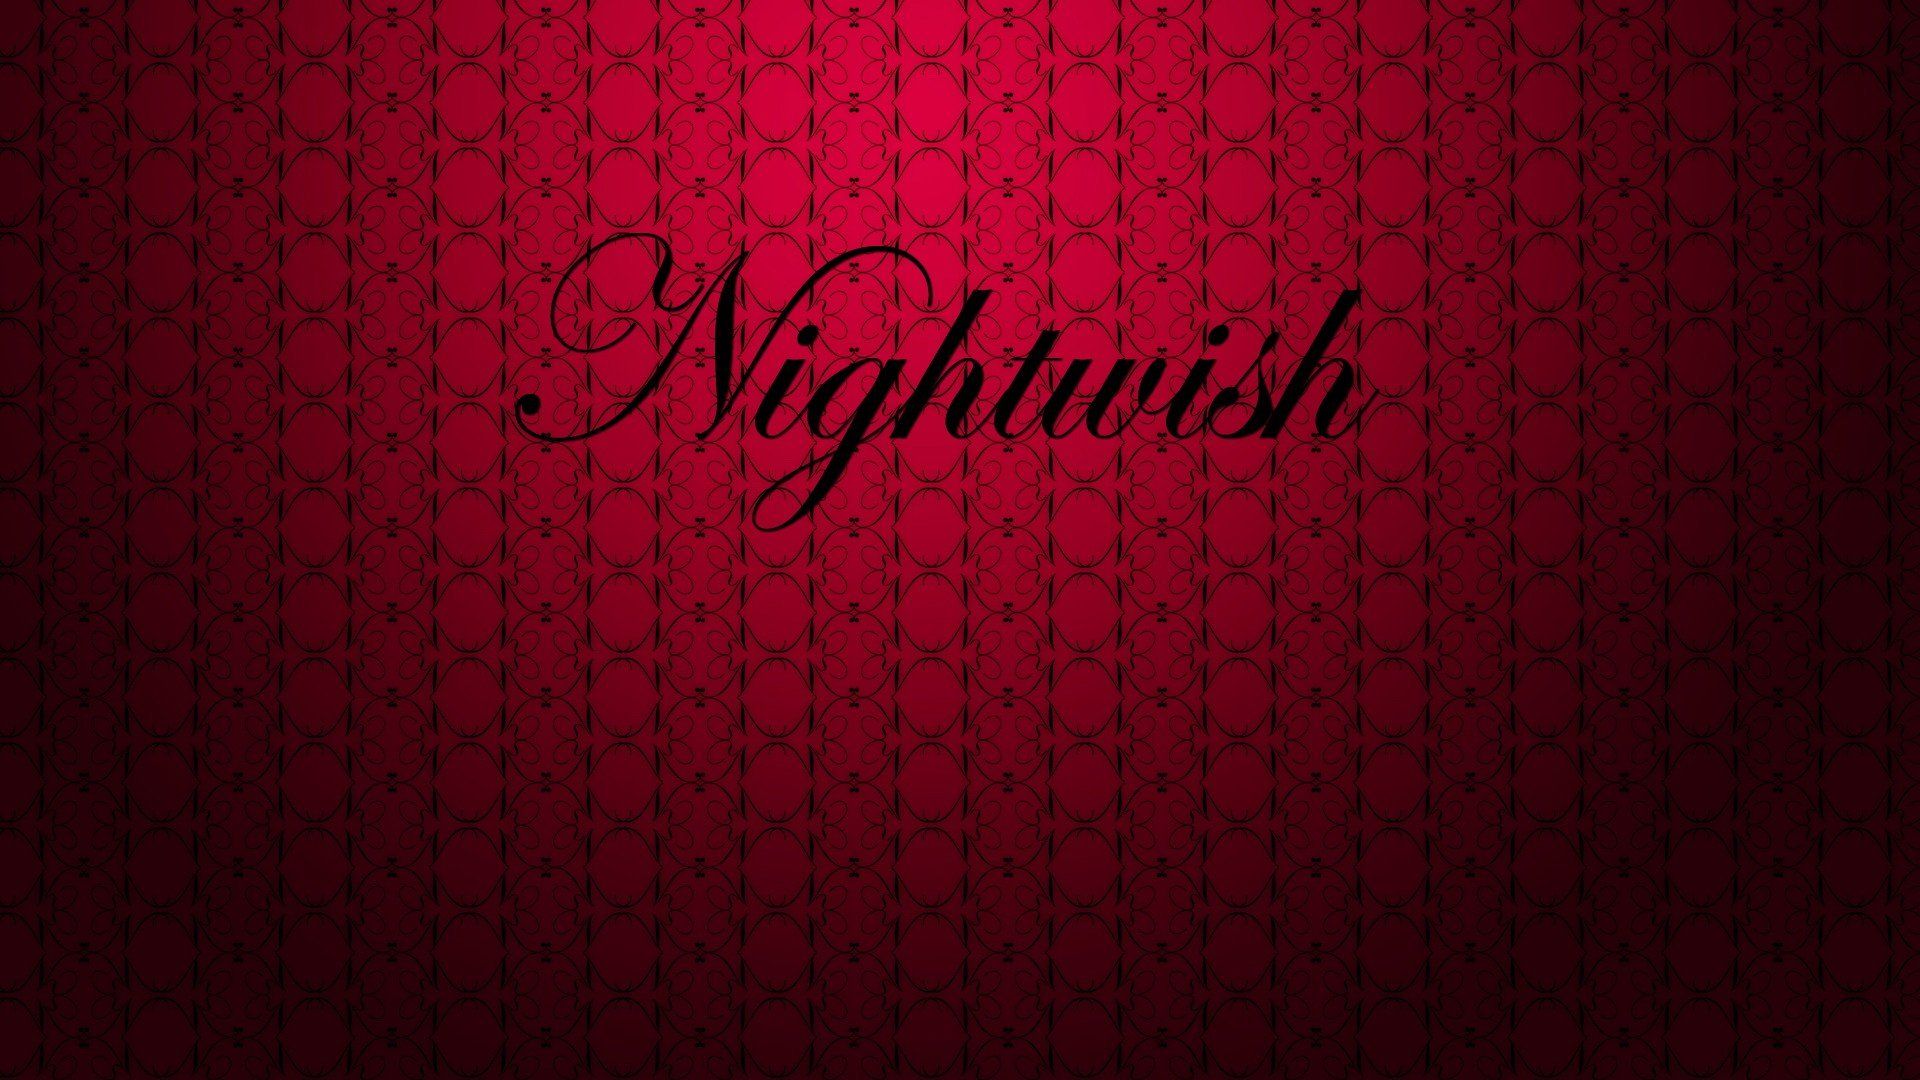 Nightwish wallpaper | 1920x1080 | 341311 | WallpaperUP